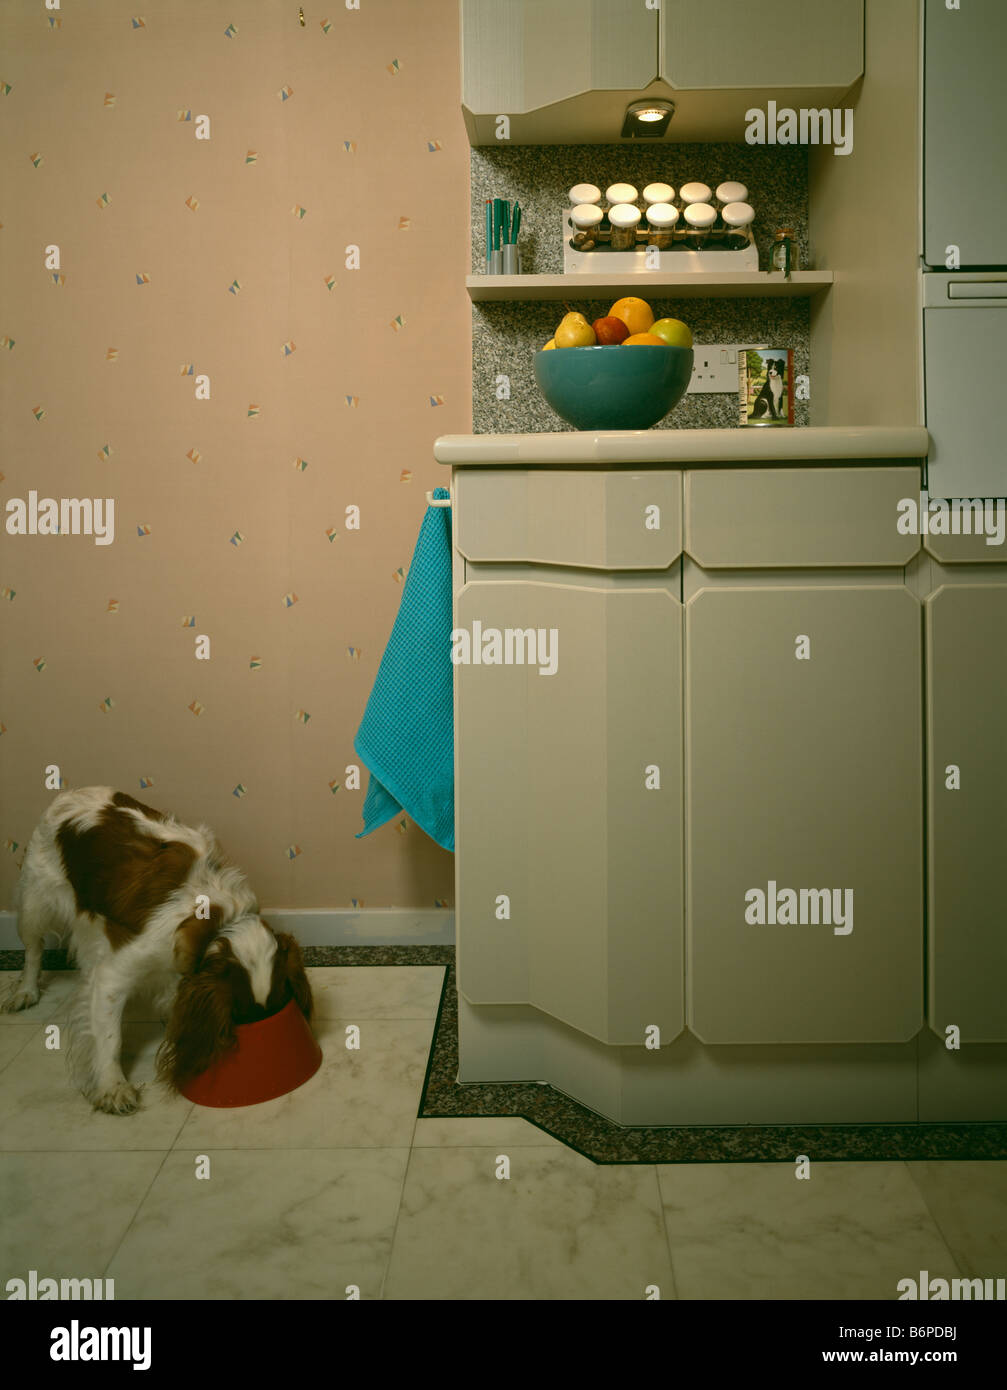 Dog Eating Food From Bowl On Floor Beside Built In Kitchen Dresser